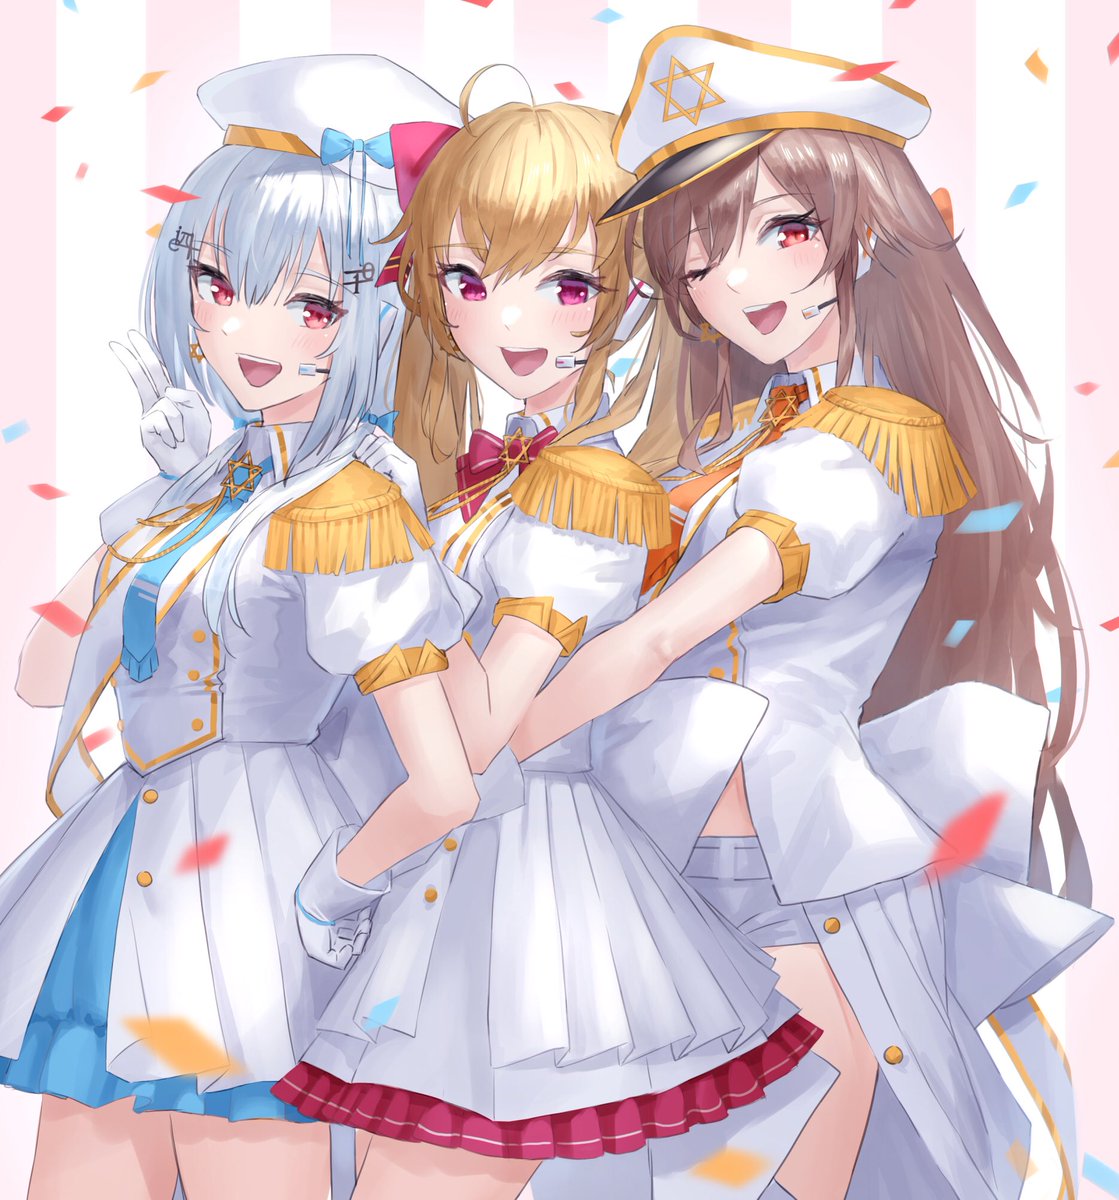 takamiya rion multiple girls 3girls red eyes one eye closed brown hair gloves smile  illustration images